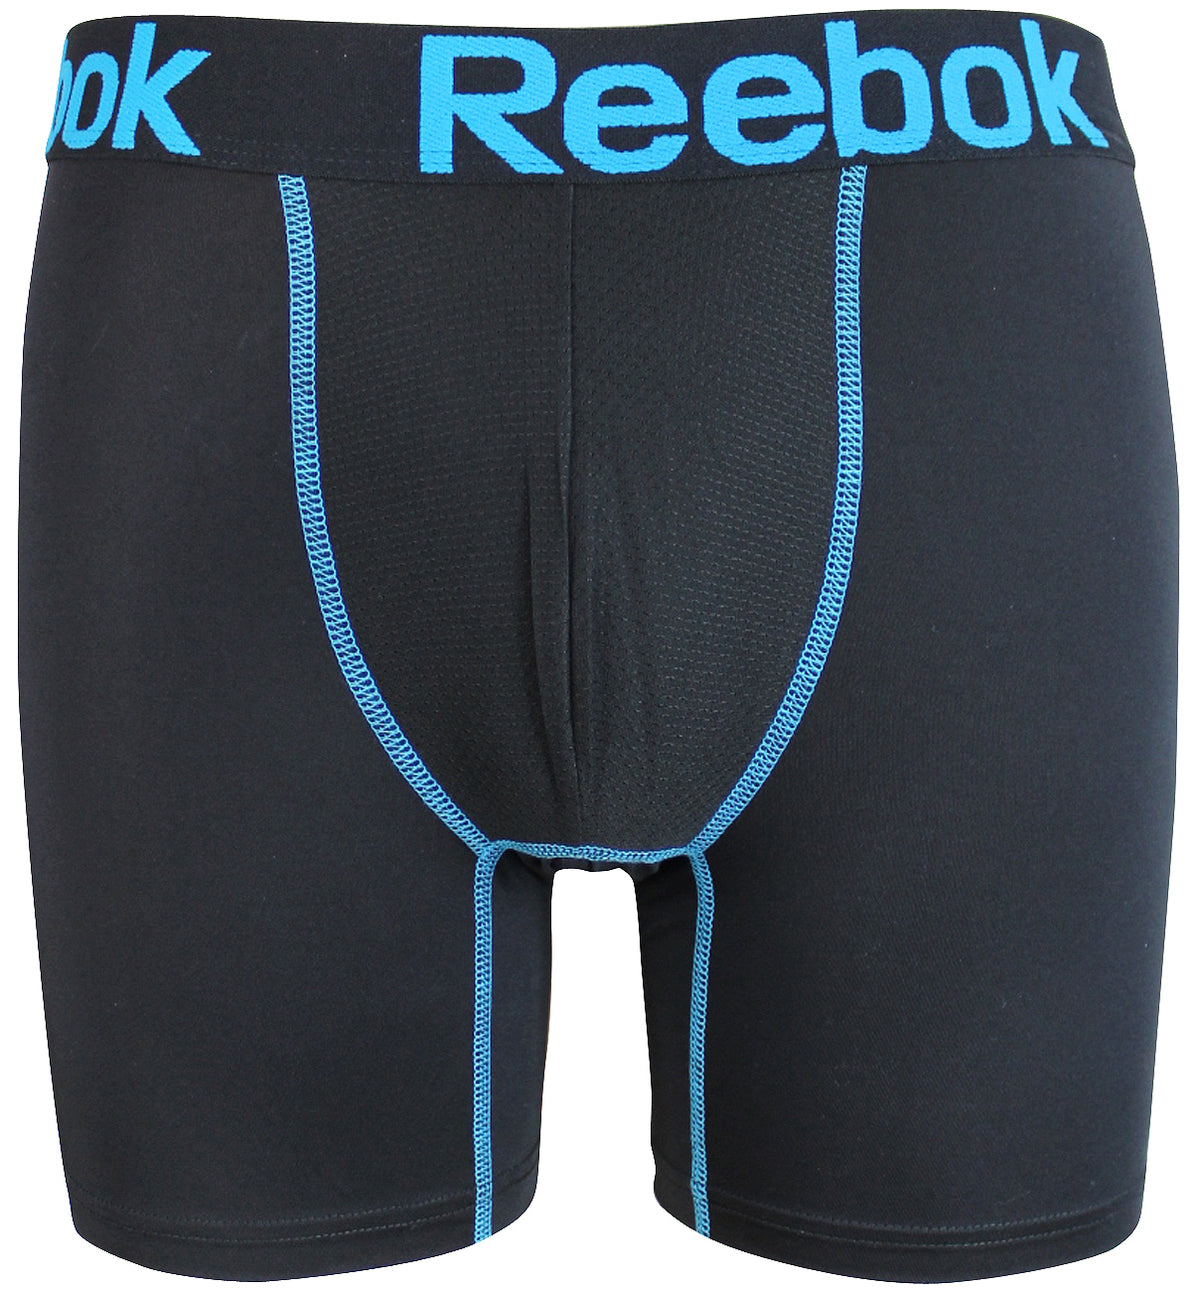 Reebok Men's Performance Training Boxer Briefs Black Wild Blue